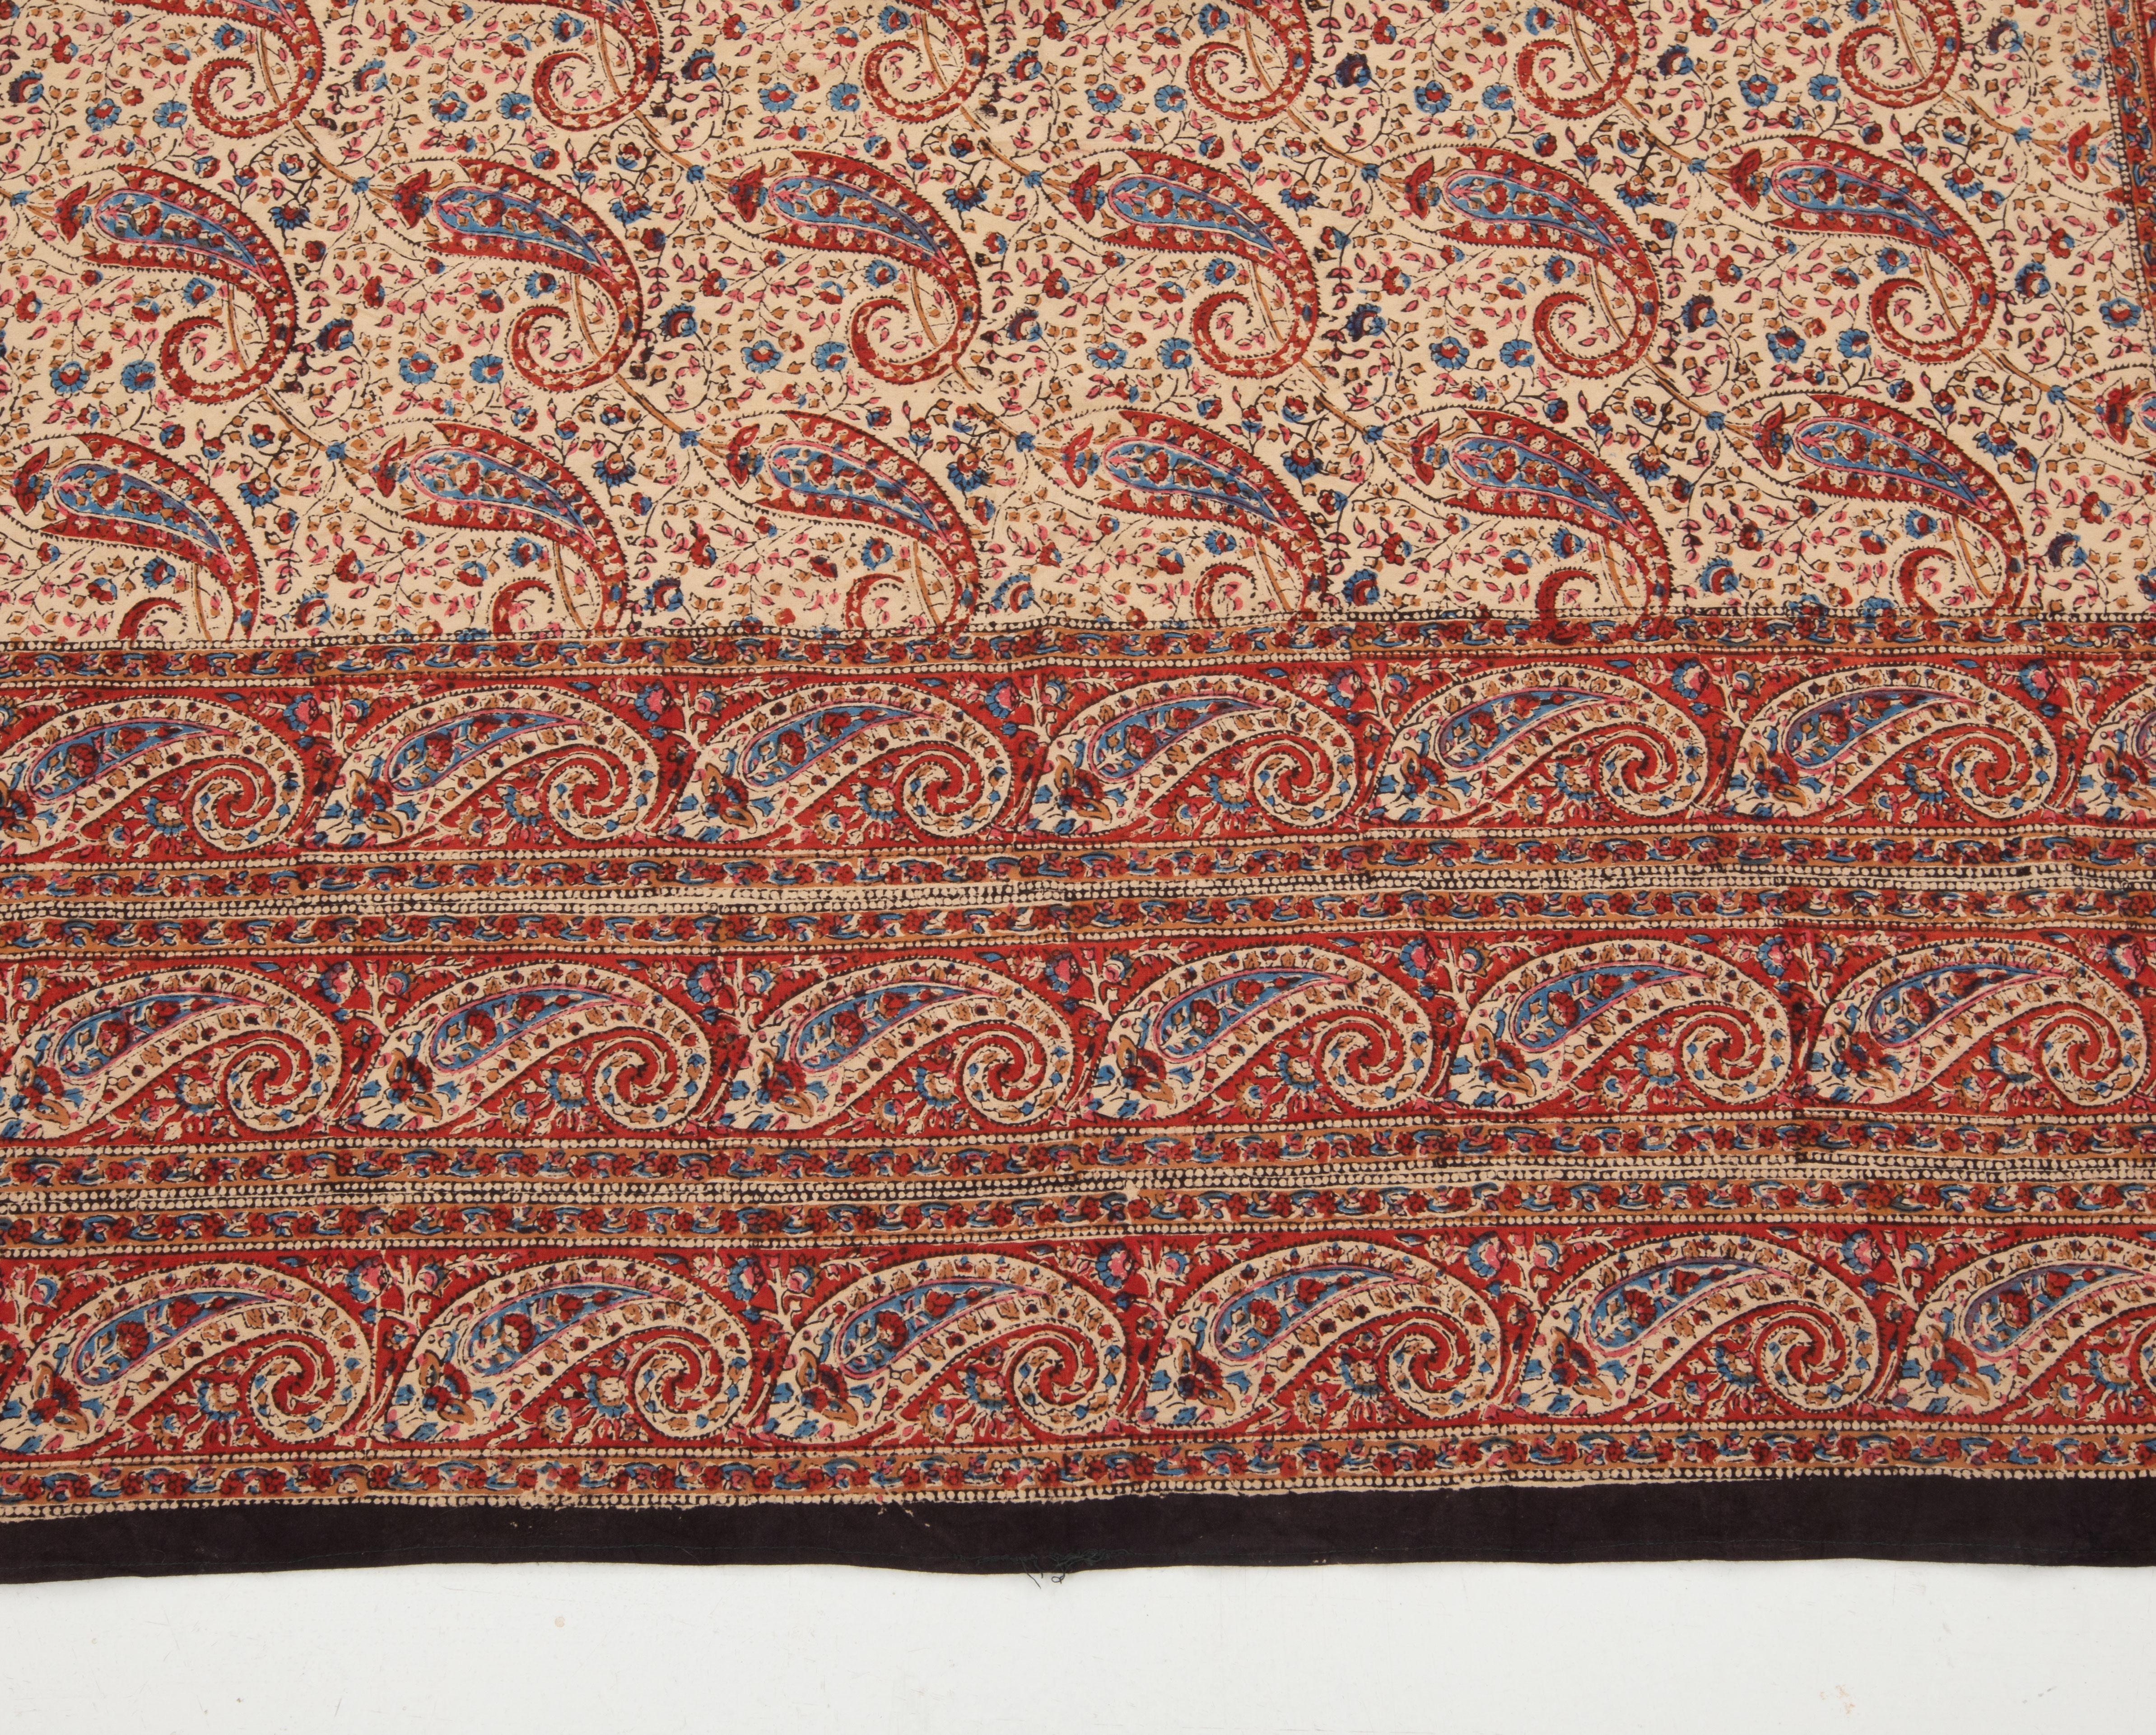 Indian Cotton Kalamkar, Block Printed Panel from India, Mid 20th C.